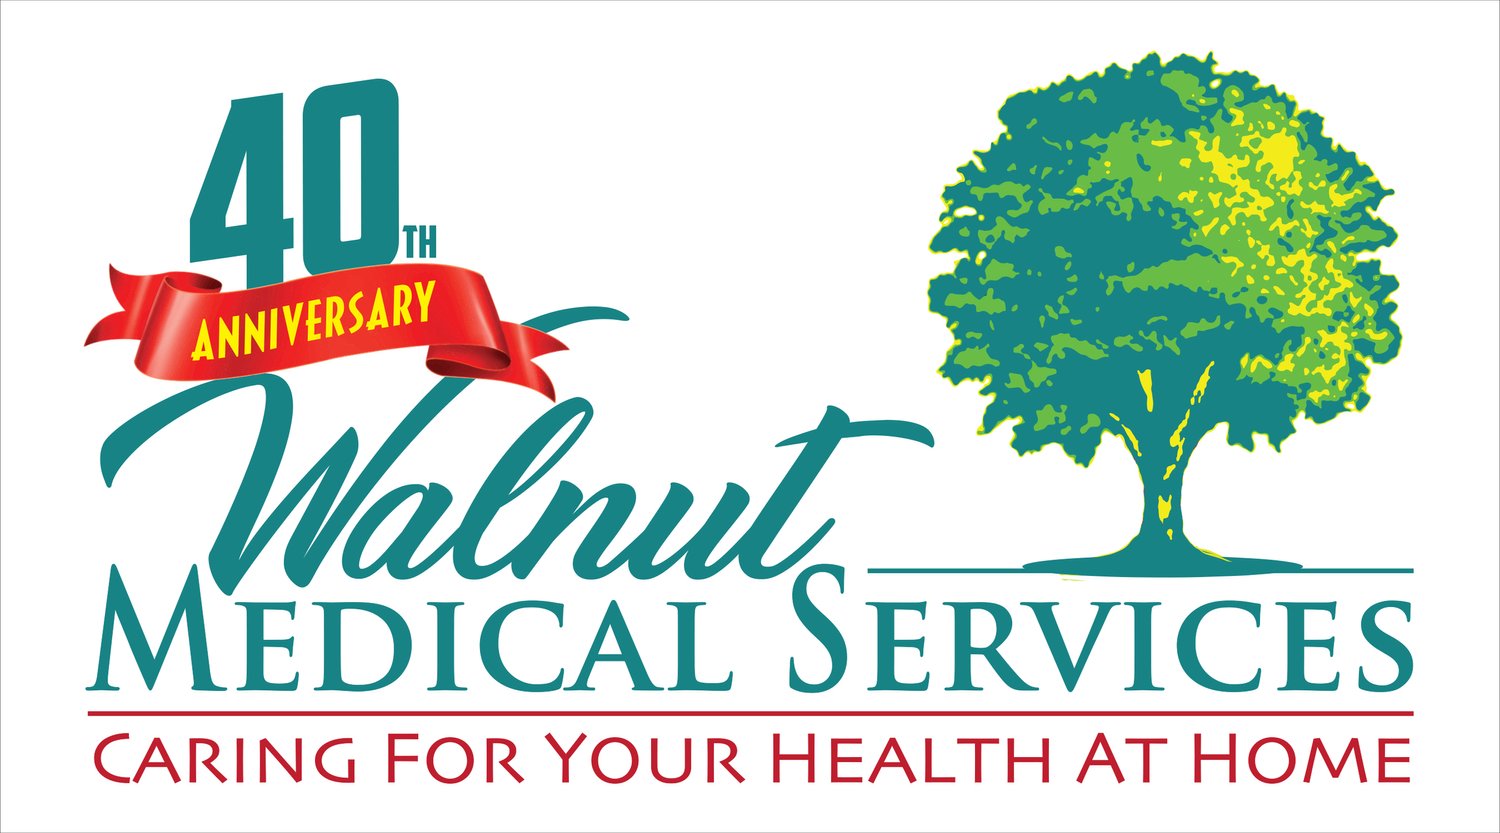 Walnut Medical Services